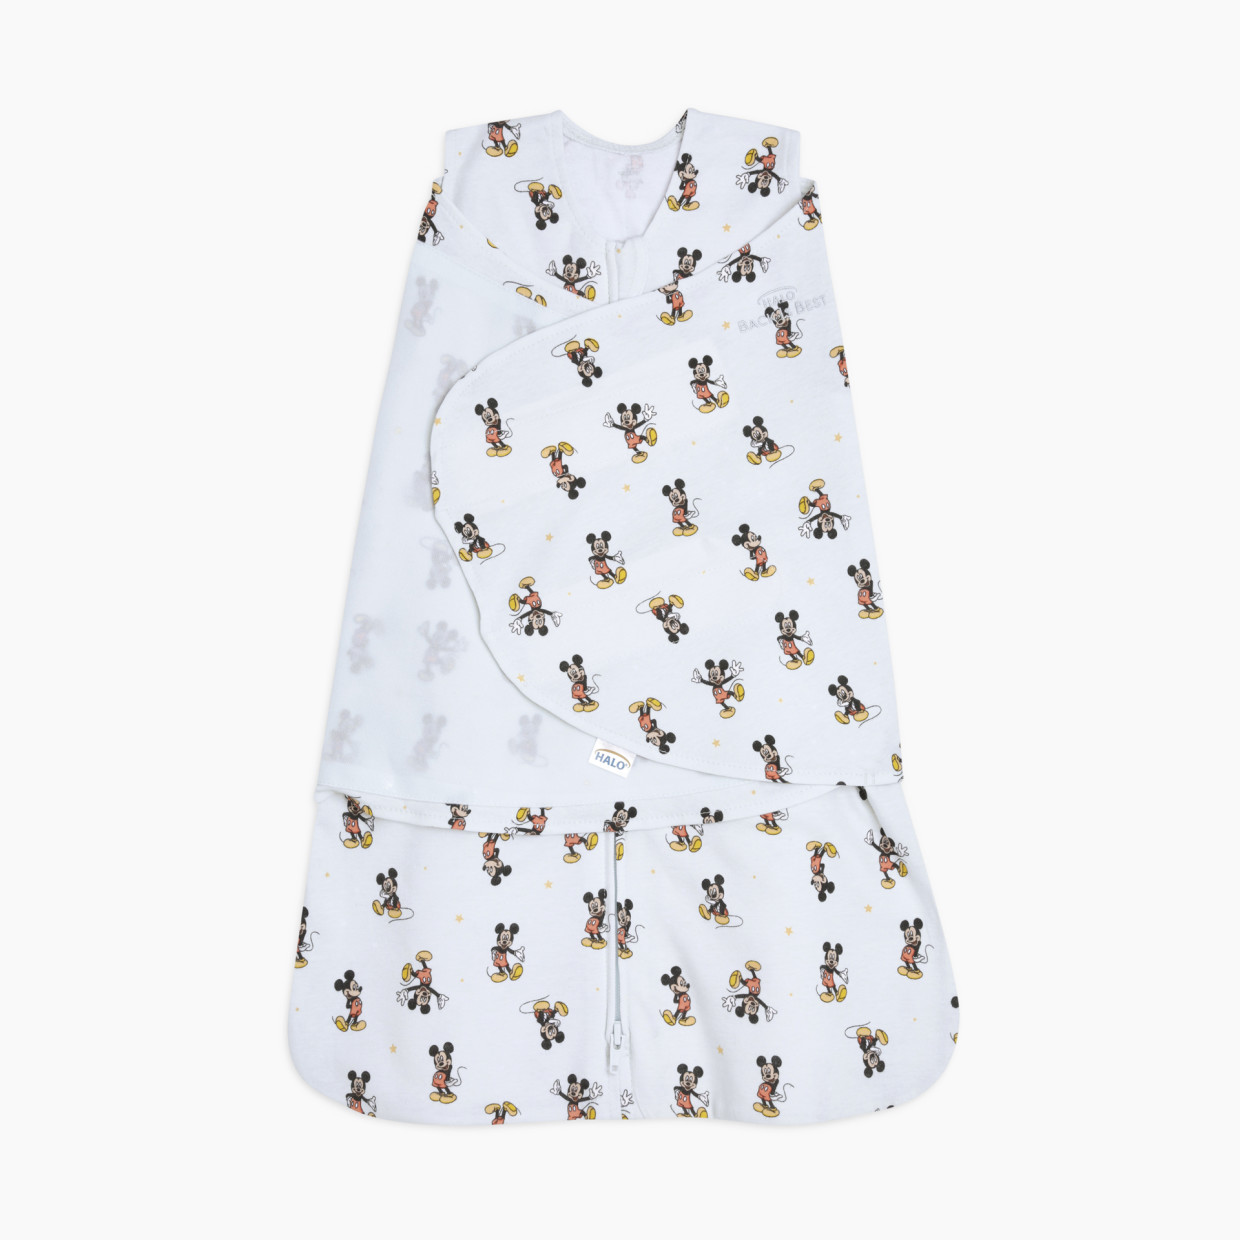 Halo Disney SleepSack Swaddle Cotton - Mickey Fun, Small | Babylist Shop